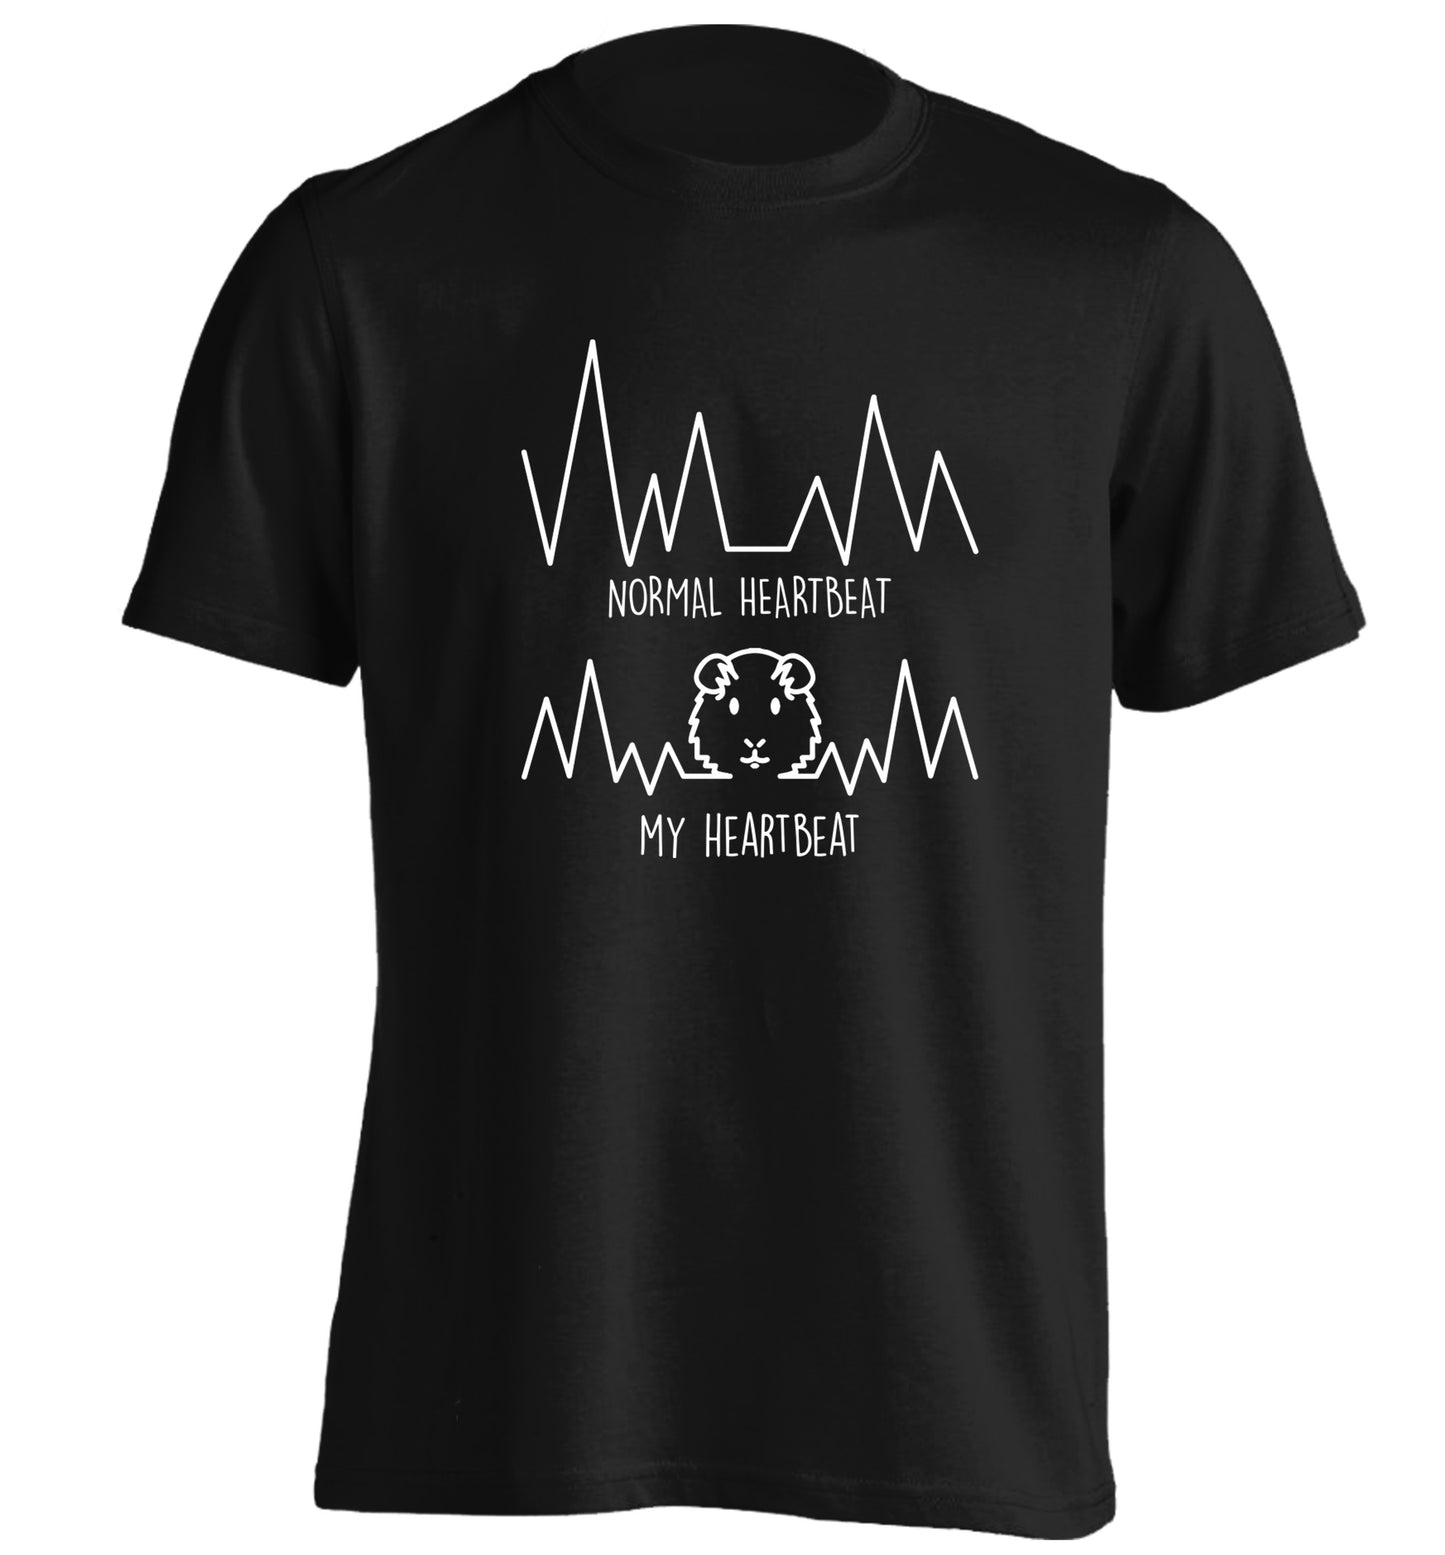 Normal heartbeat vs my heartbeat guinea pig lover adults unisex black Tshirt 2XL